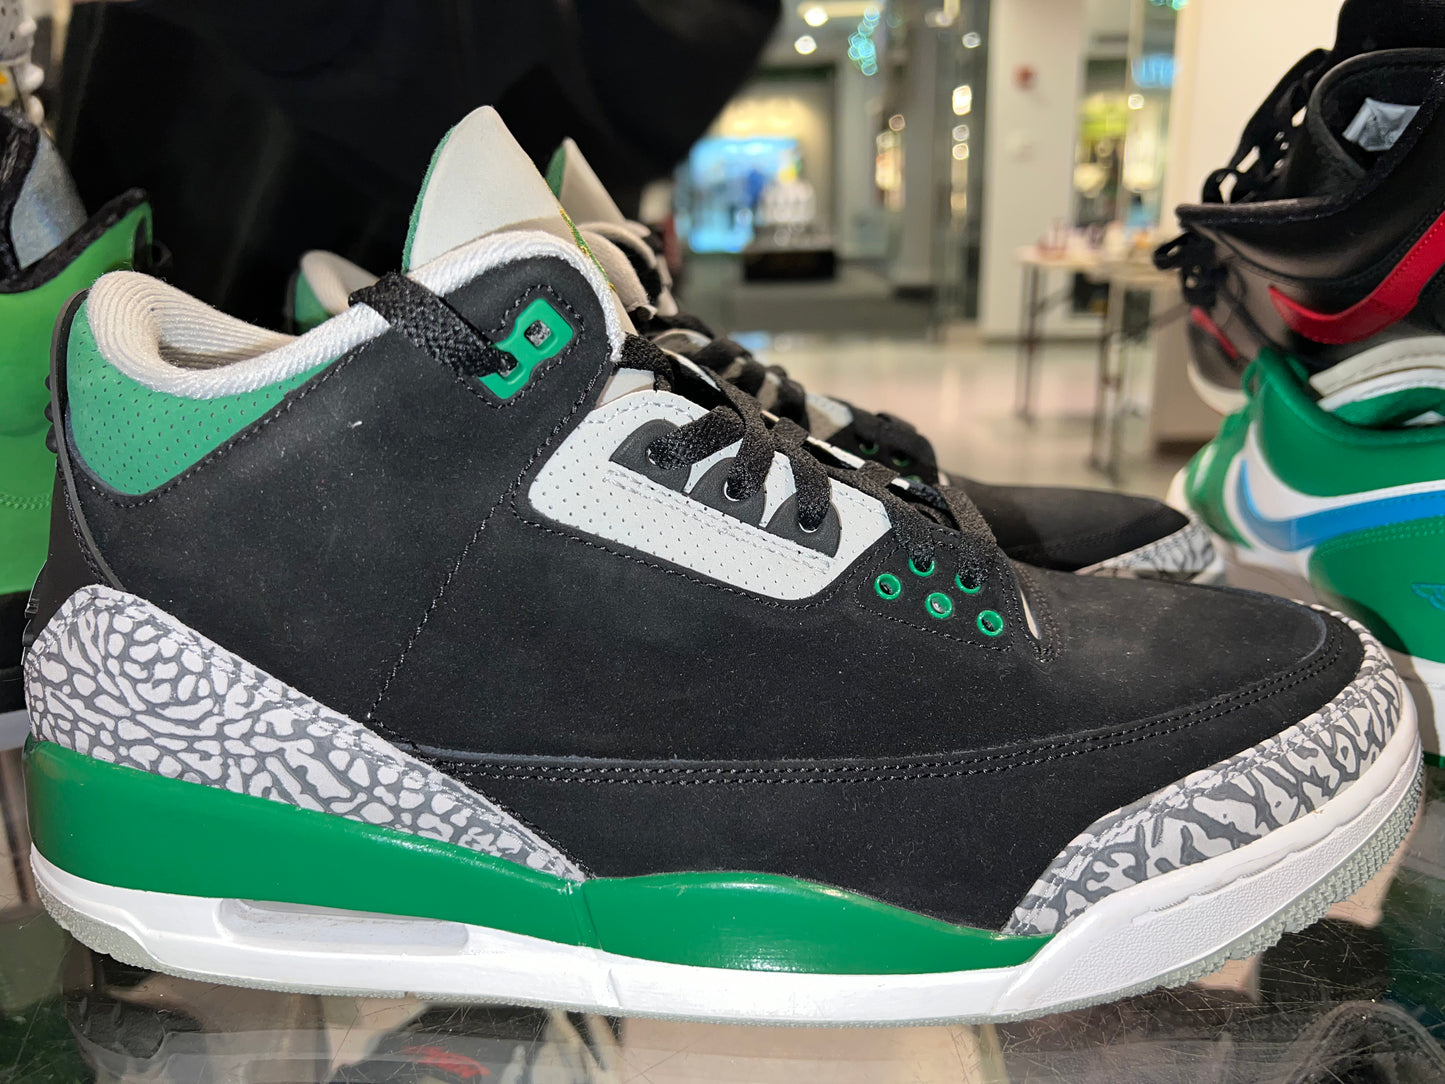 Size 12.5 Air Jordan 3 “Pine Green” (Mall)